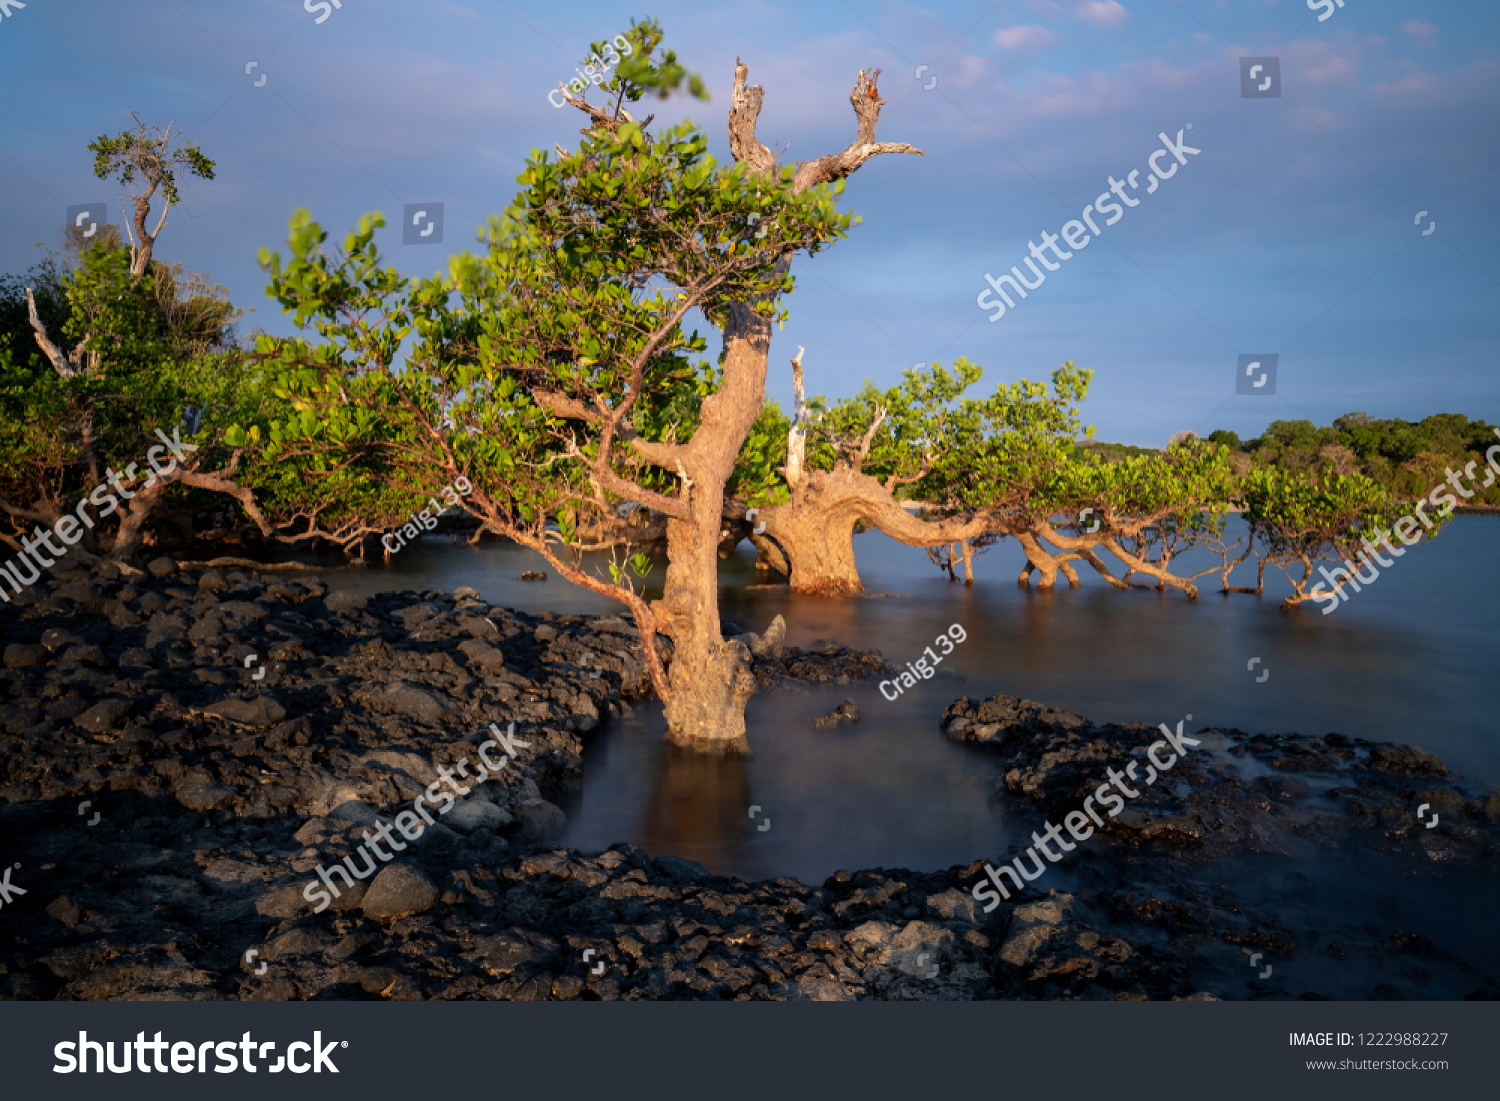 Long exposure of mangrove trees at sunset. Photo taken on Nosy be, Madagascar. #1222988227